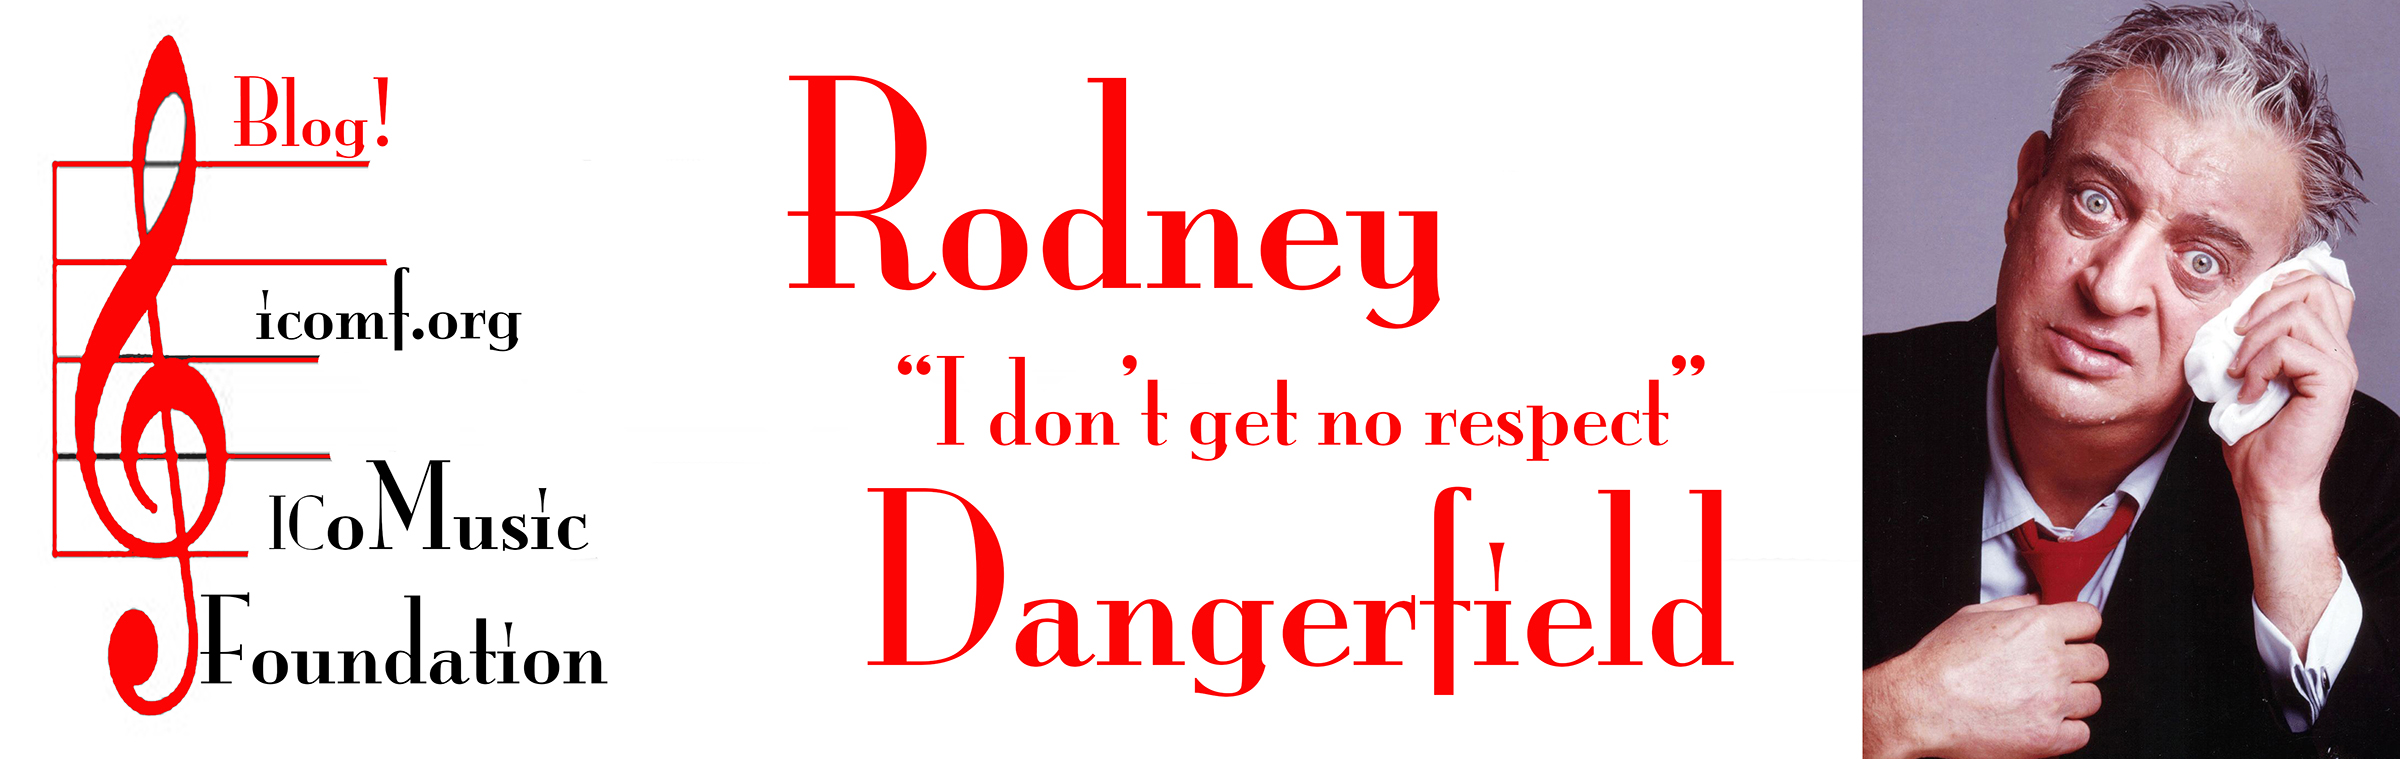 Rodney "I don't get no respect" Dangerfield Blog Banner